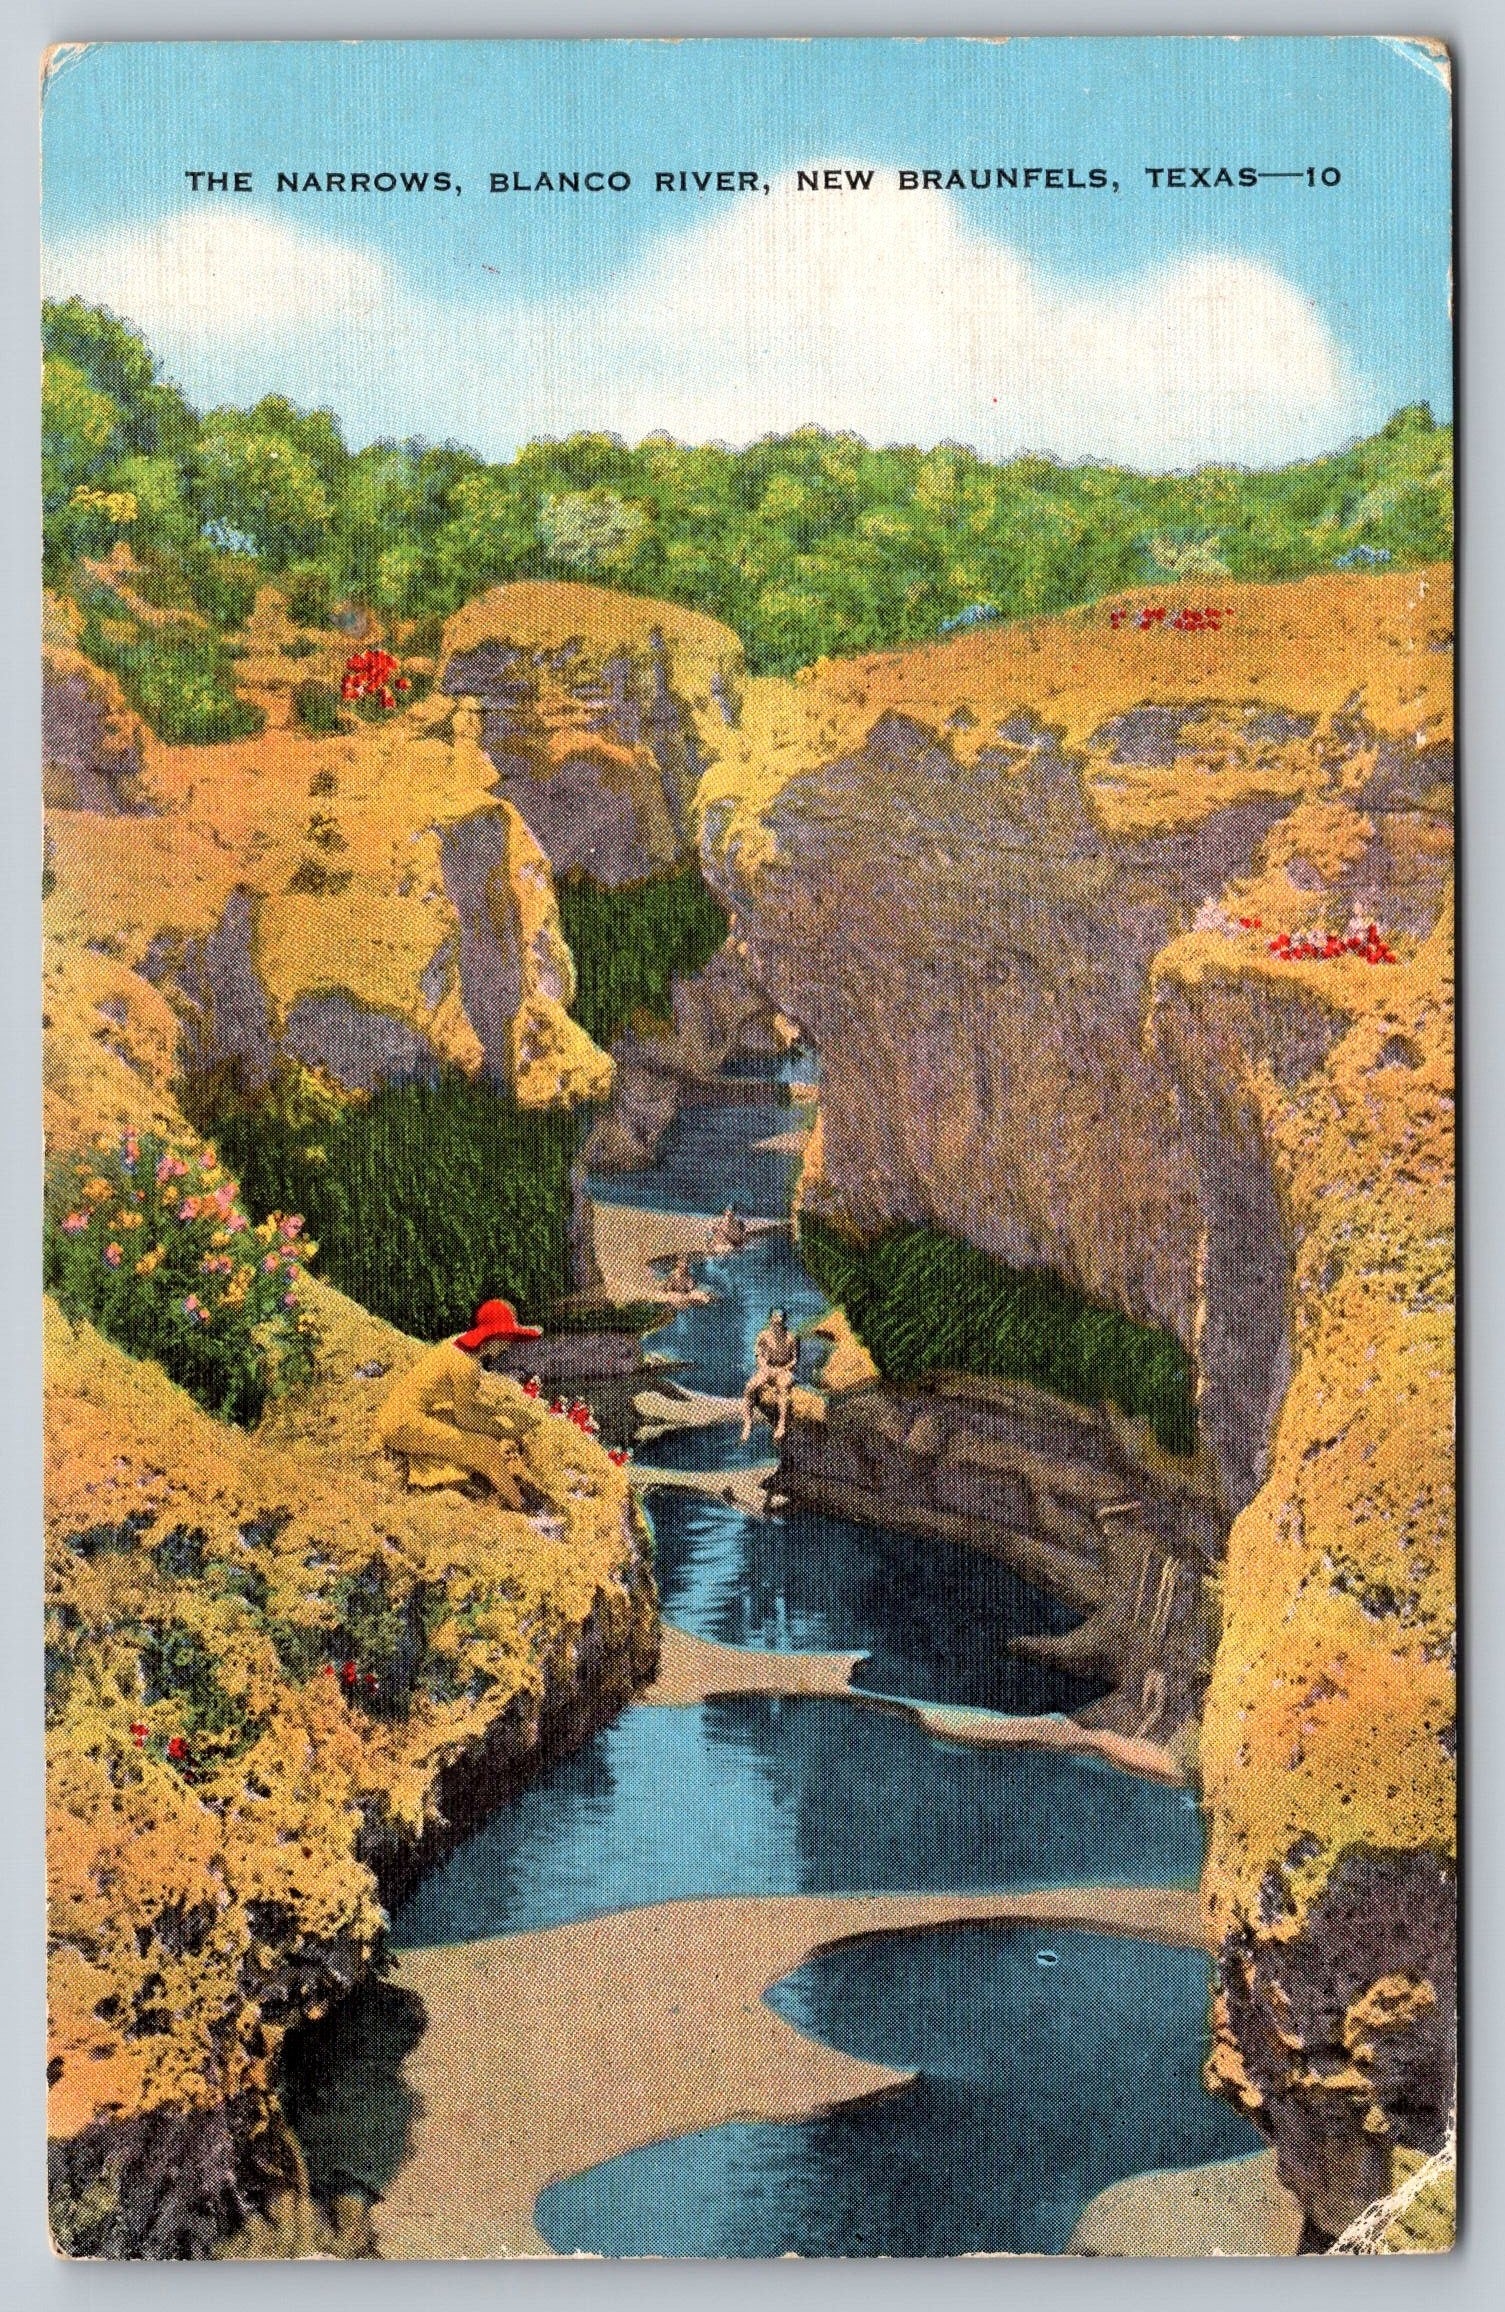 The Narrows, Blanco River, New Braunfels, Texas, Vintage Post Card